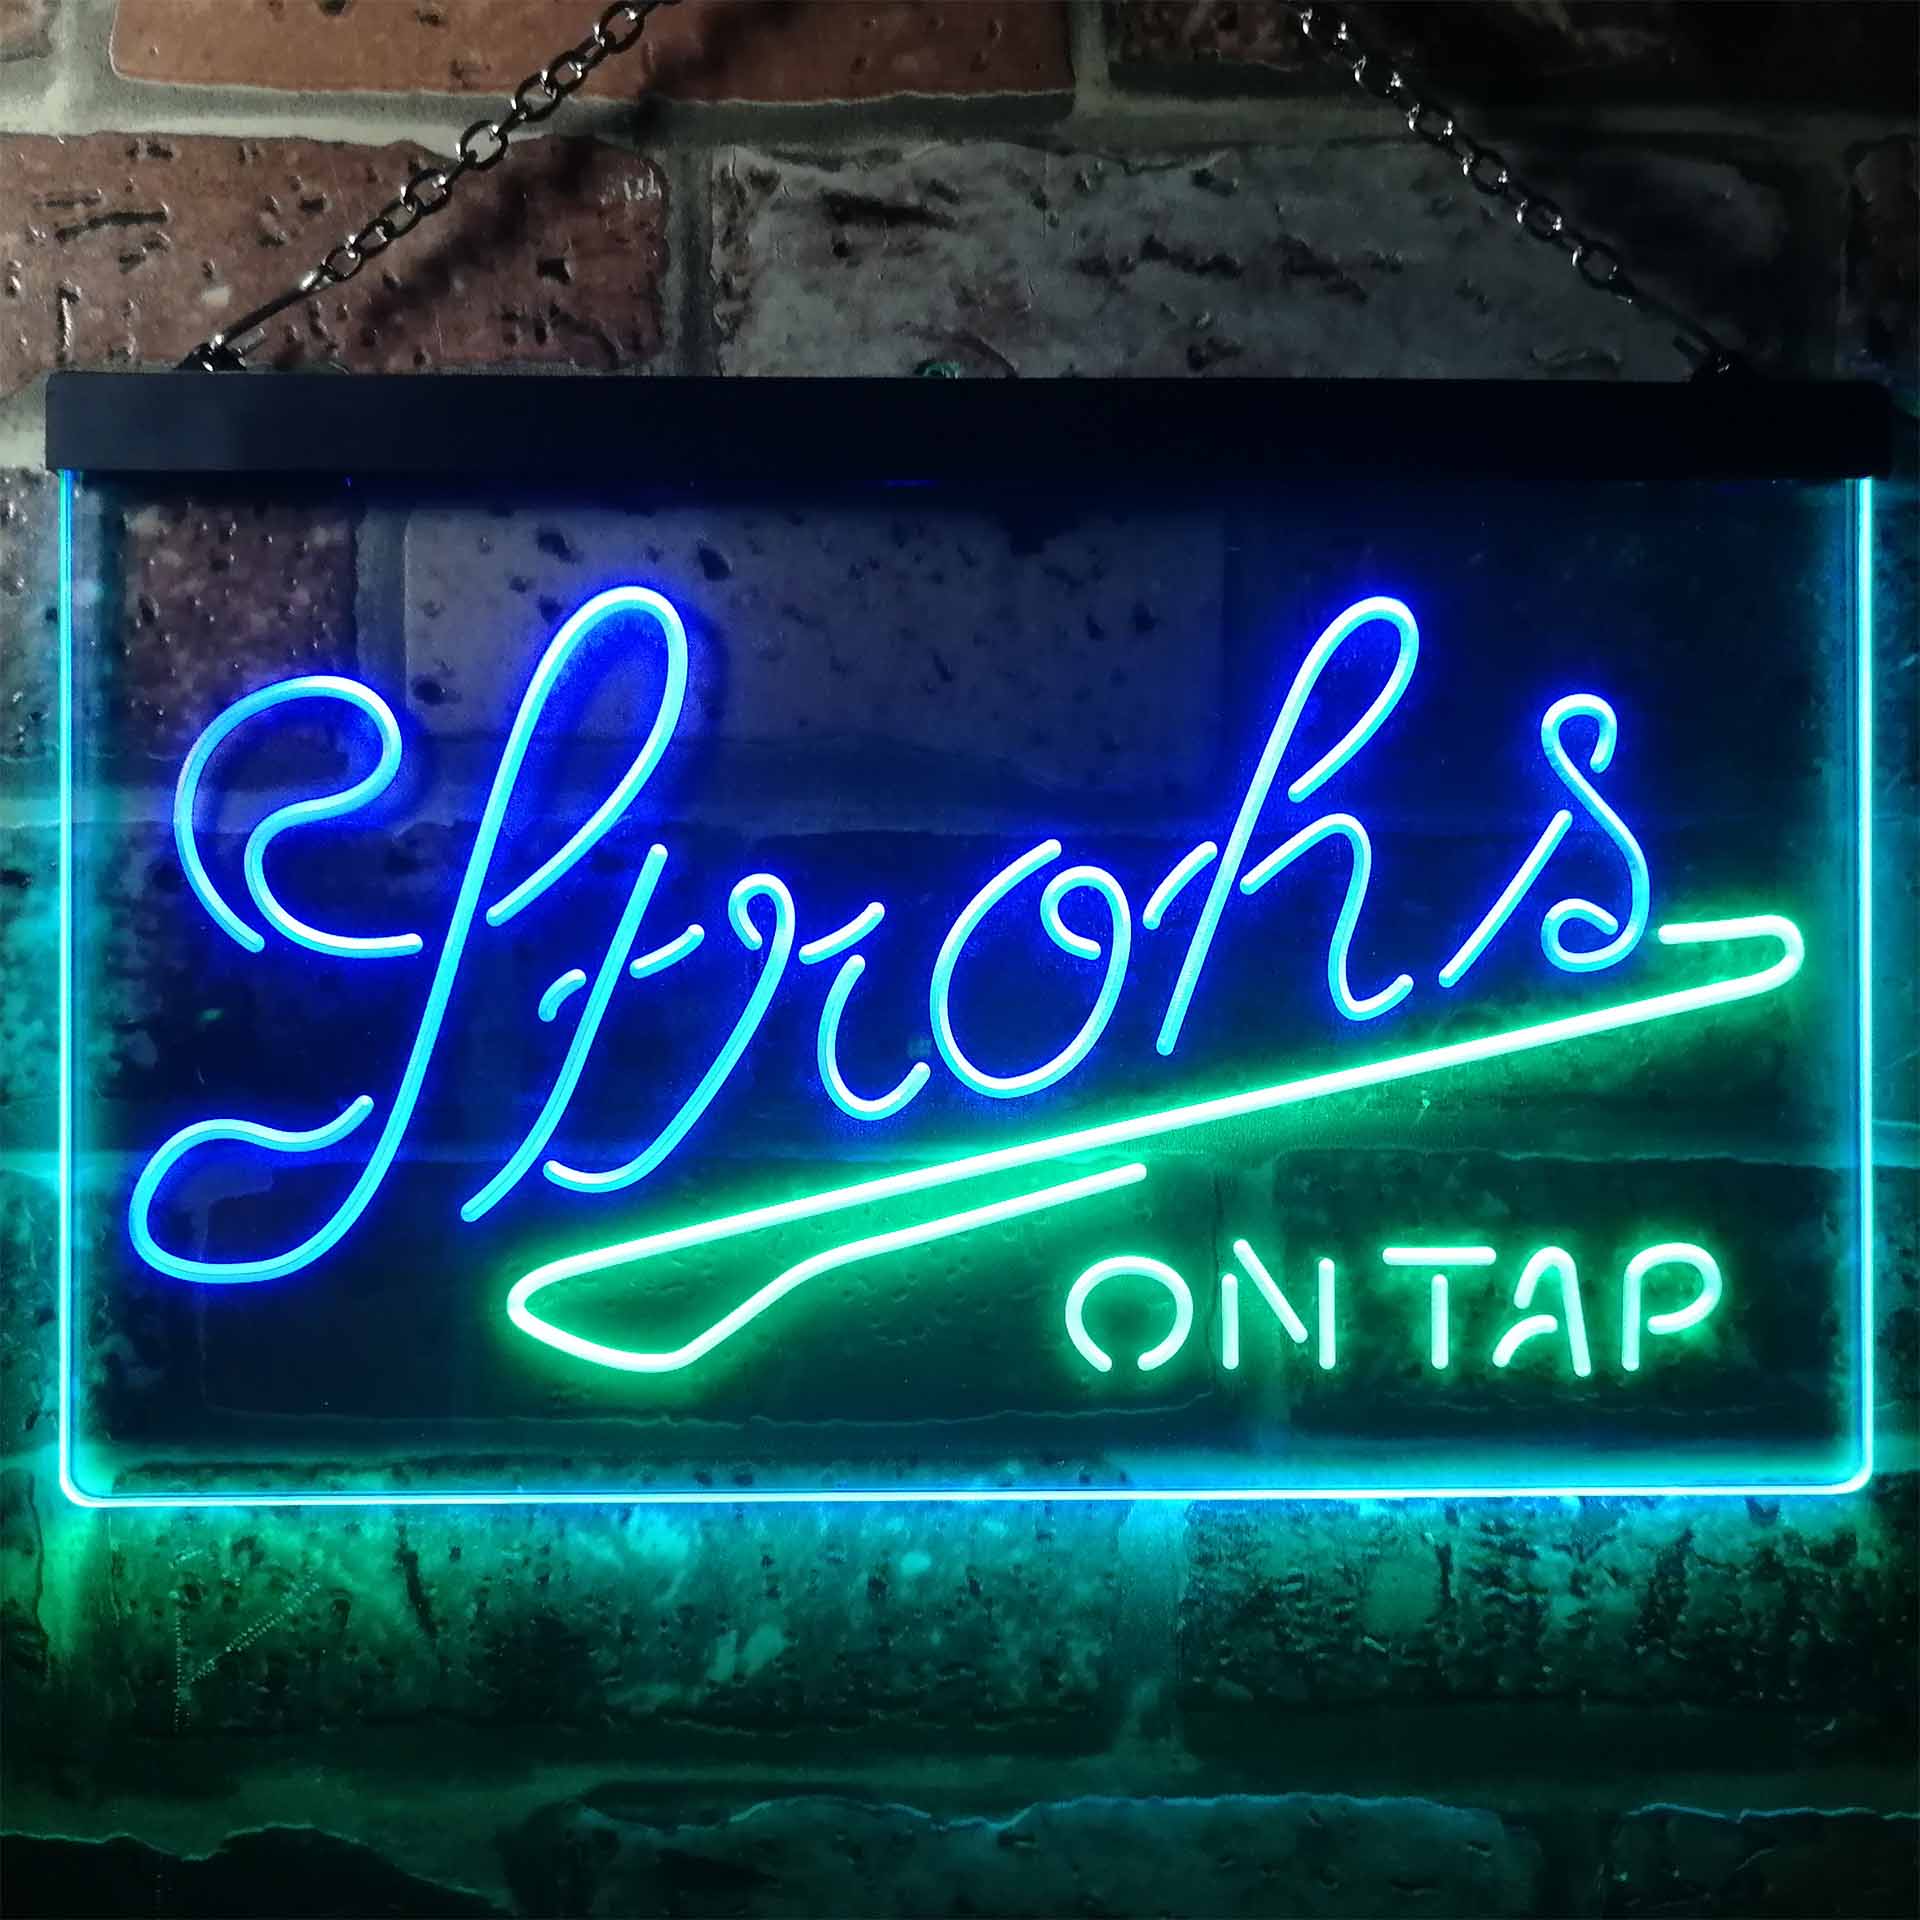 Strohs On Tap Beer Bar Neon LED Sign